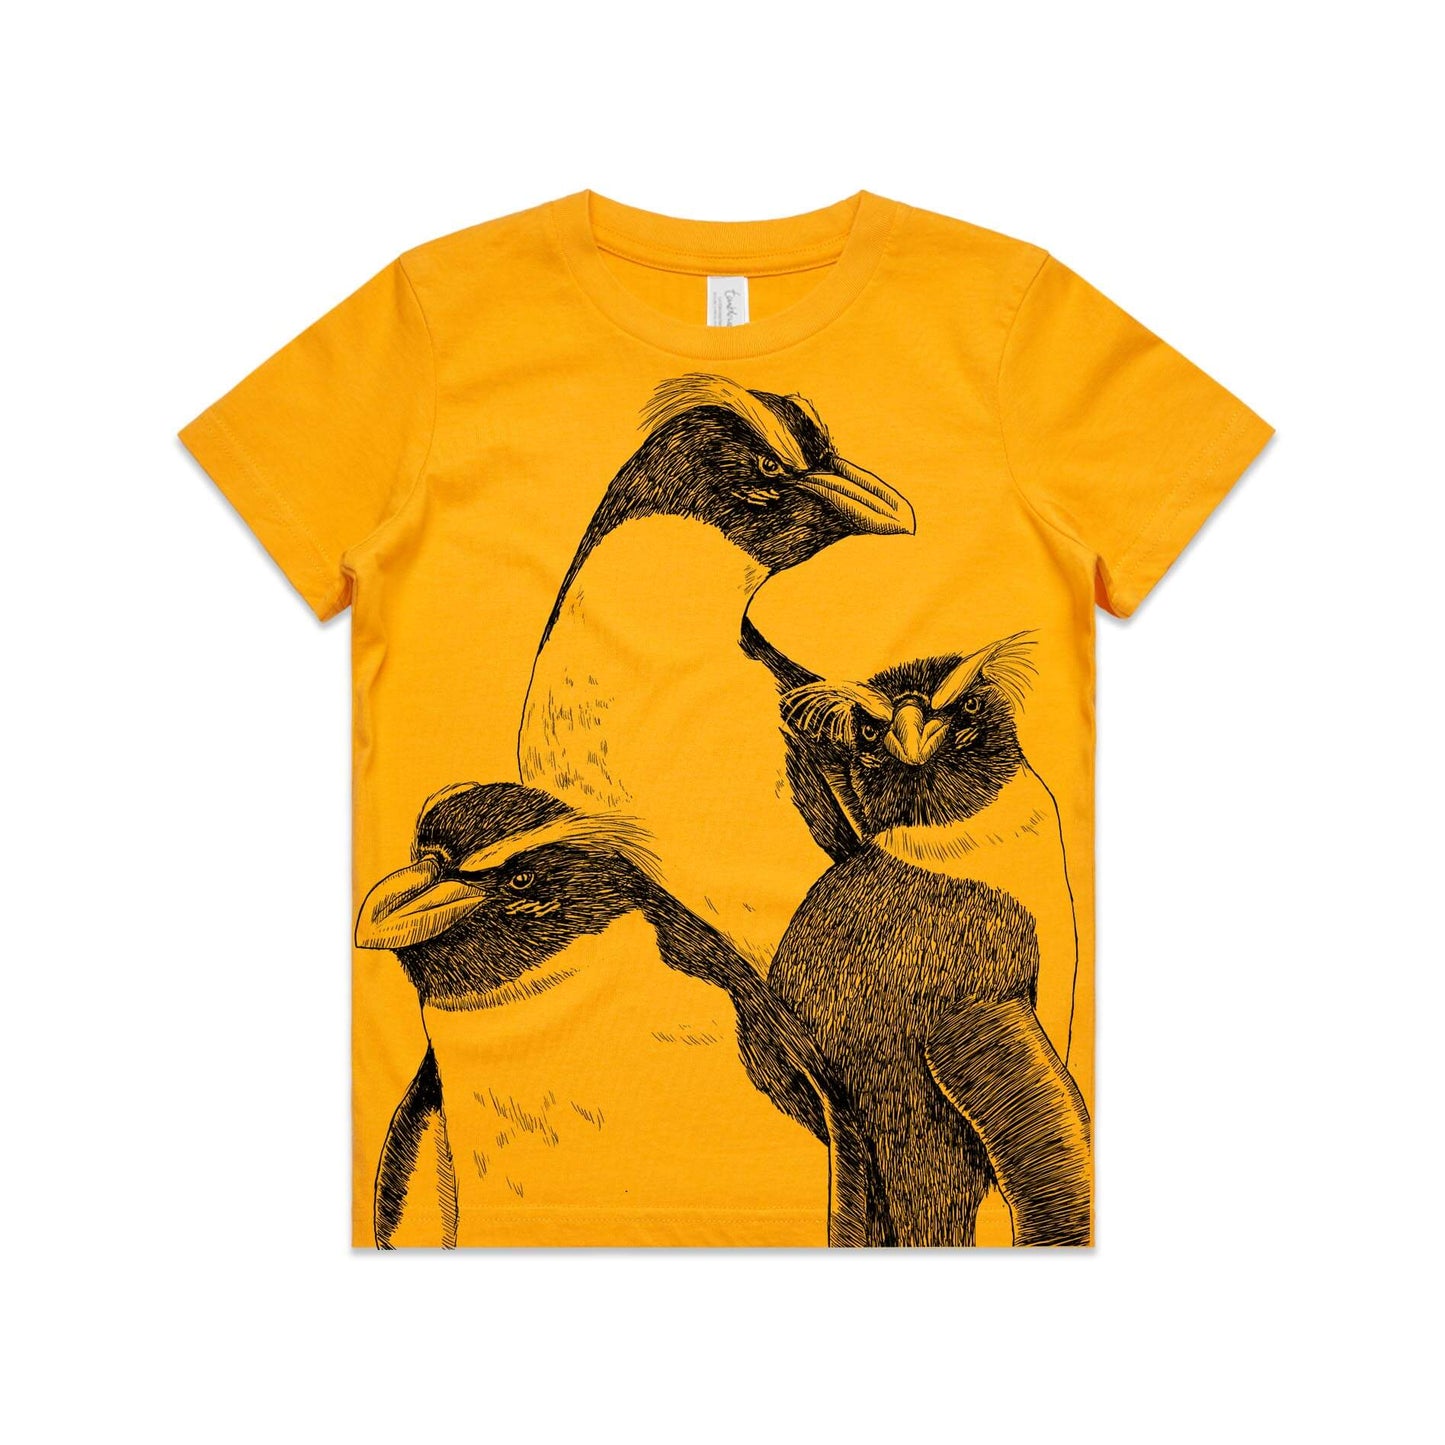 Gold, cotton kids' t-shirt with screen printed Kids tawaki/fiordland crested penguin design.